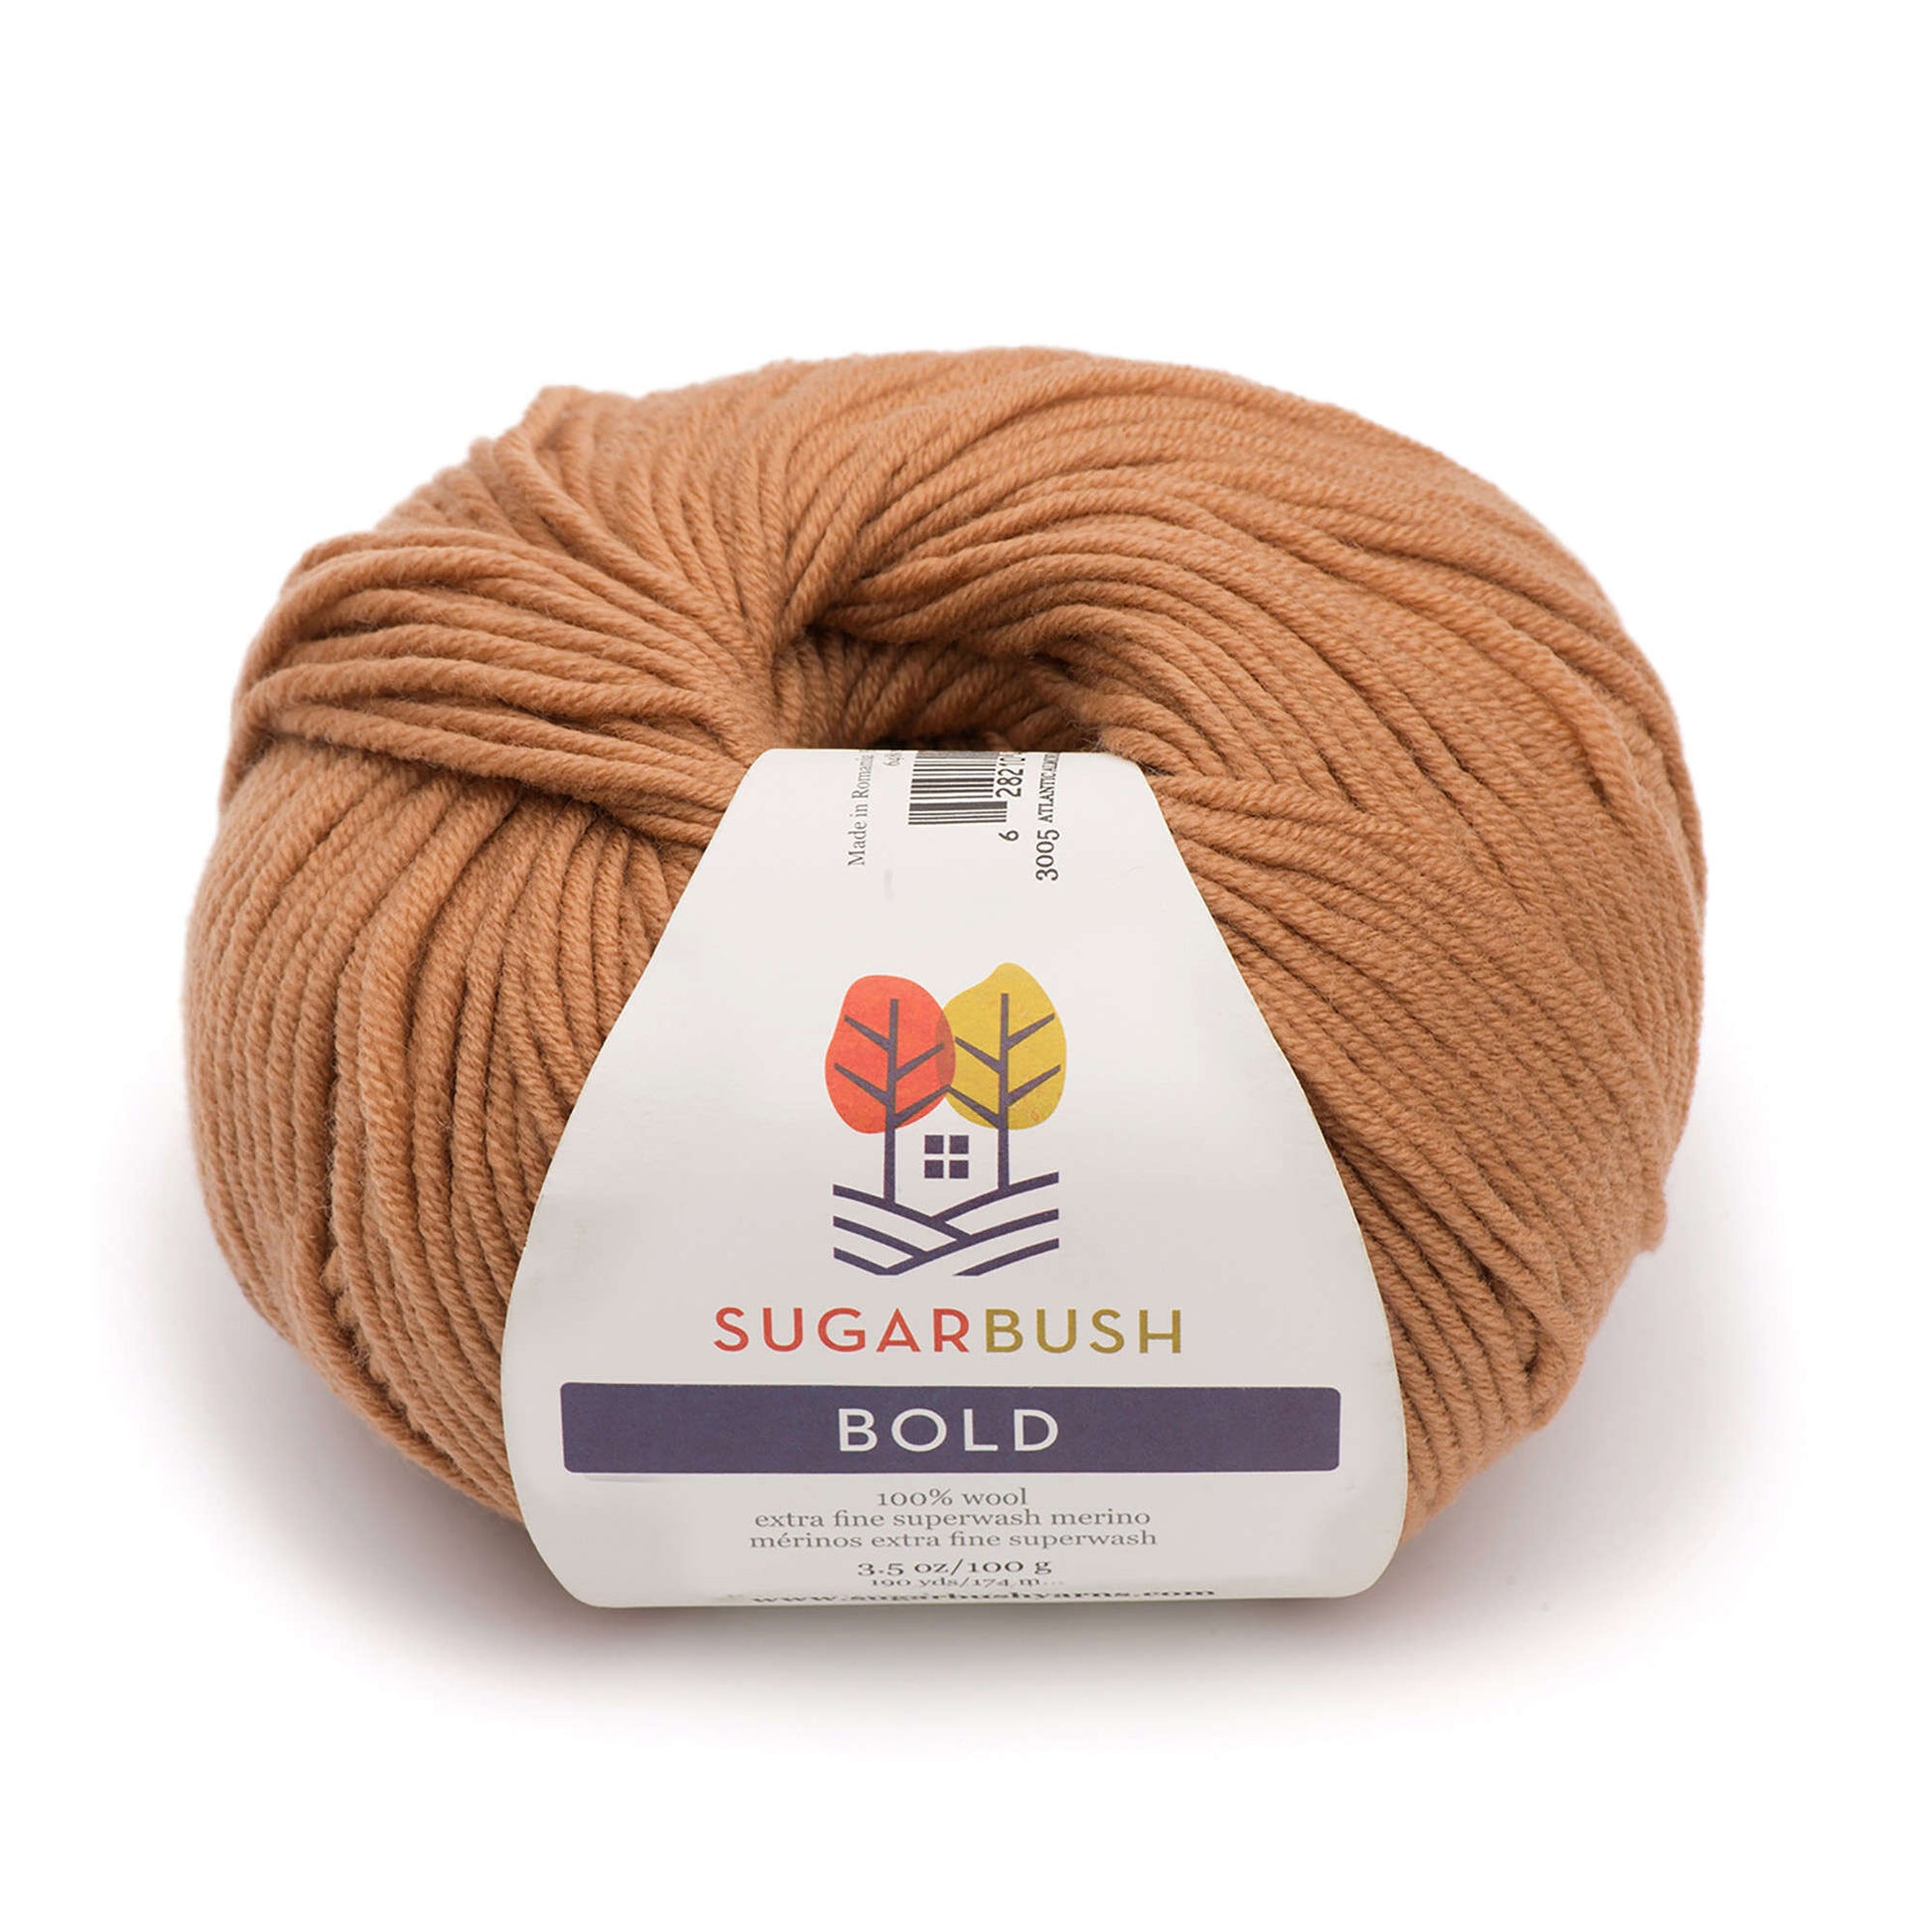 Sugar Bush Bold Yarn - Discontinued Atlantic Almond